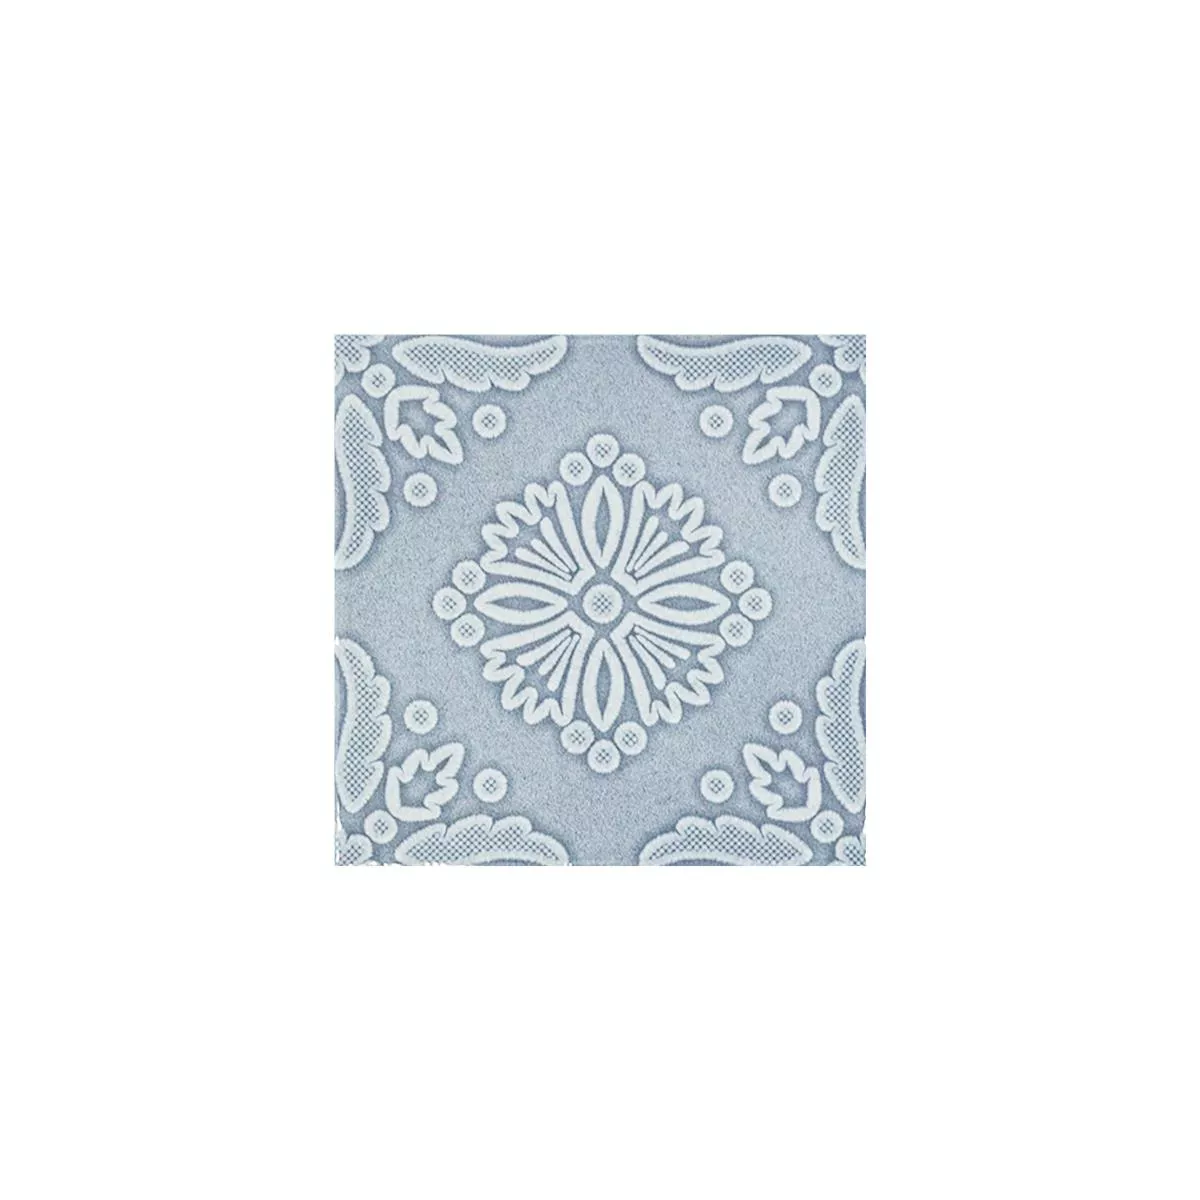 Sample Ceramic Mosaic Tiles Rivabella Relief Blue